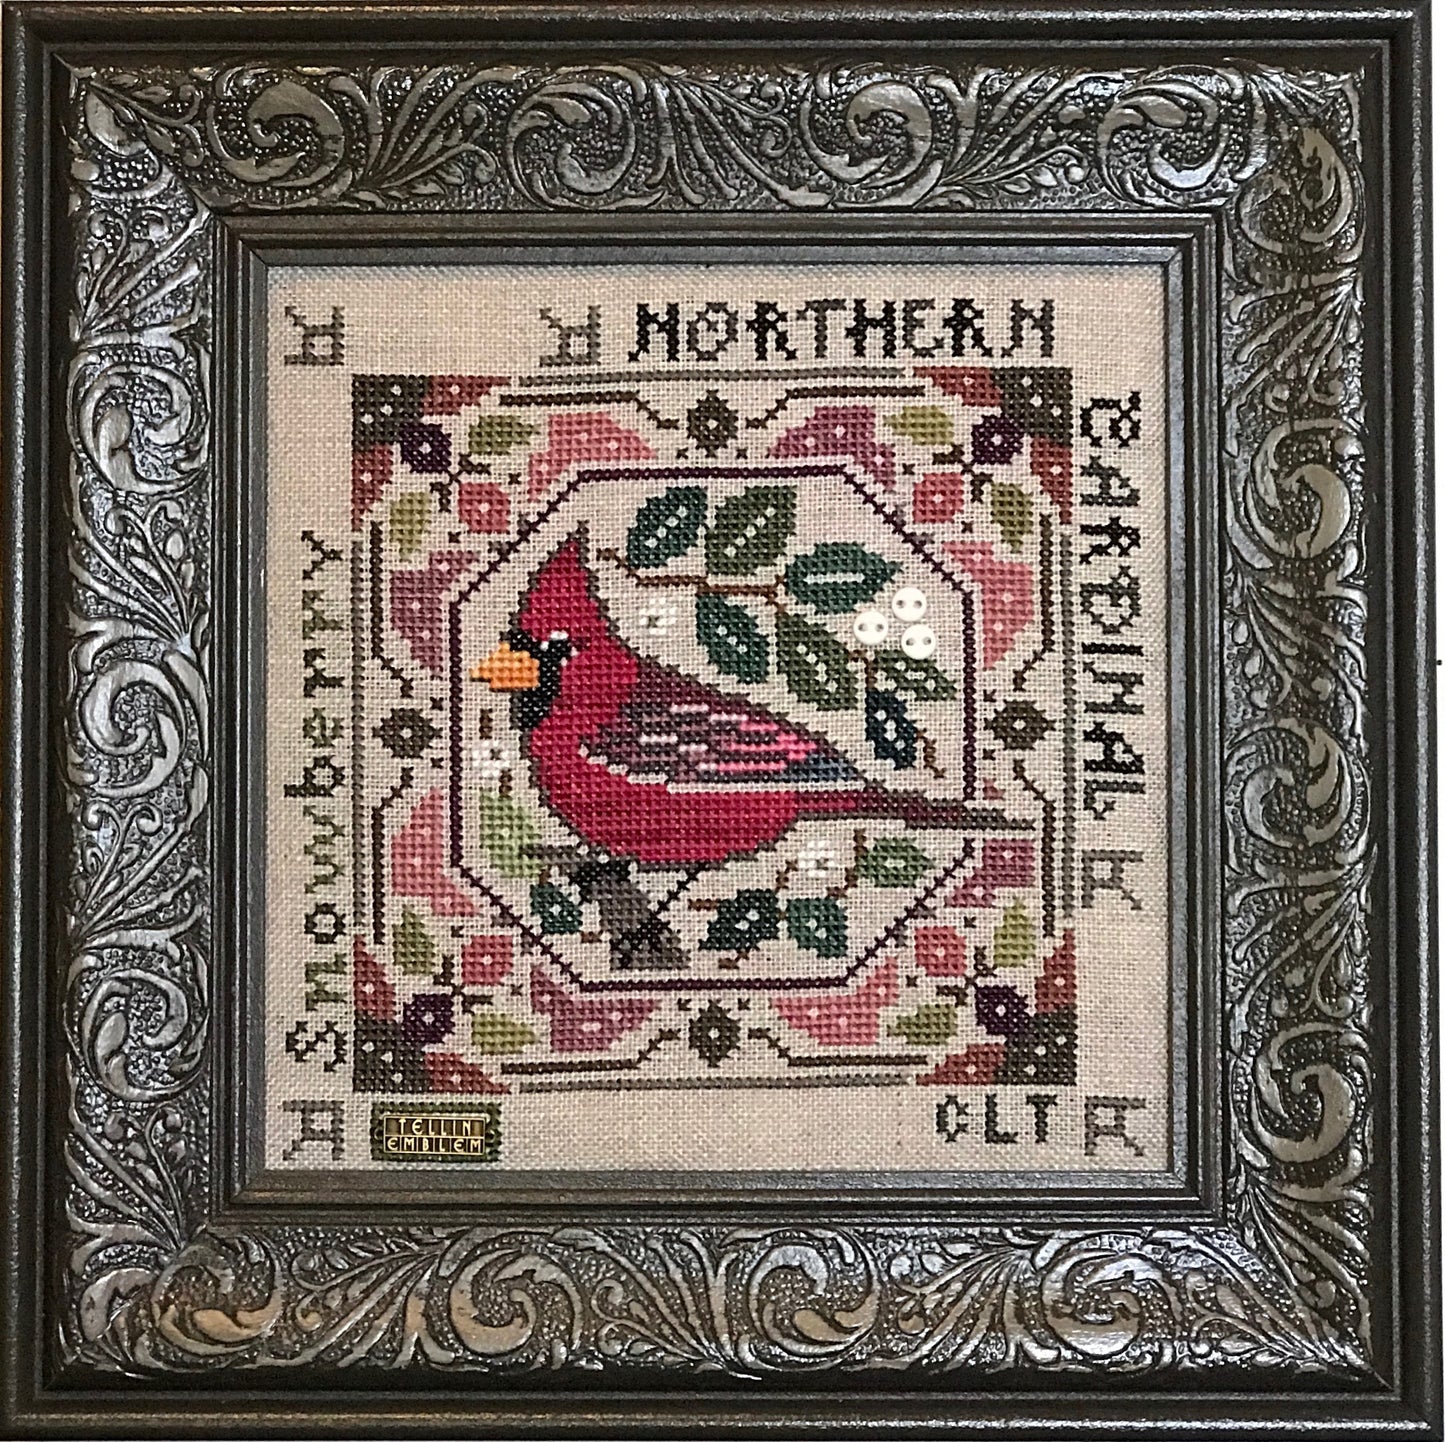 Northern Cardinal Birdie & Berries Cross Stitch Pattern by Tellin Emblem Physical Copy